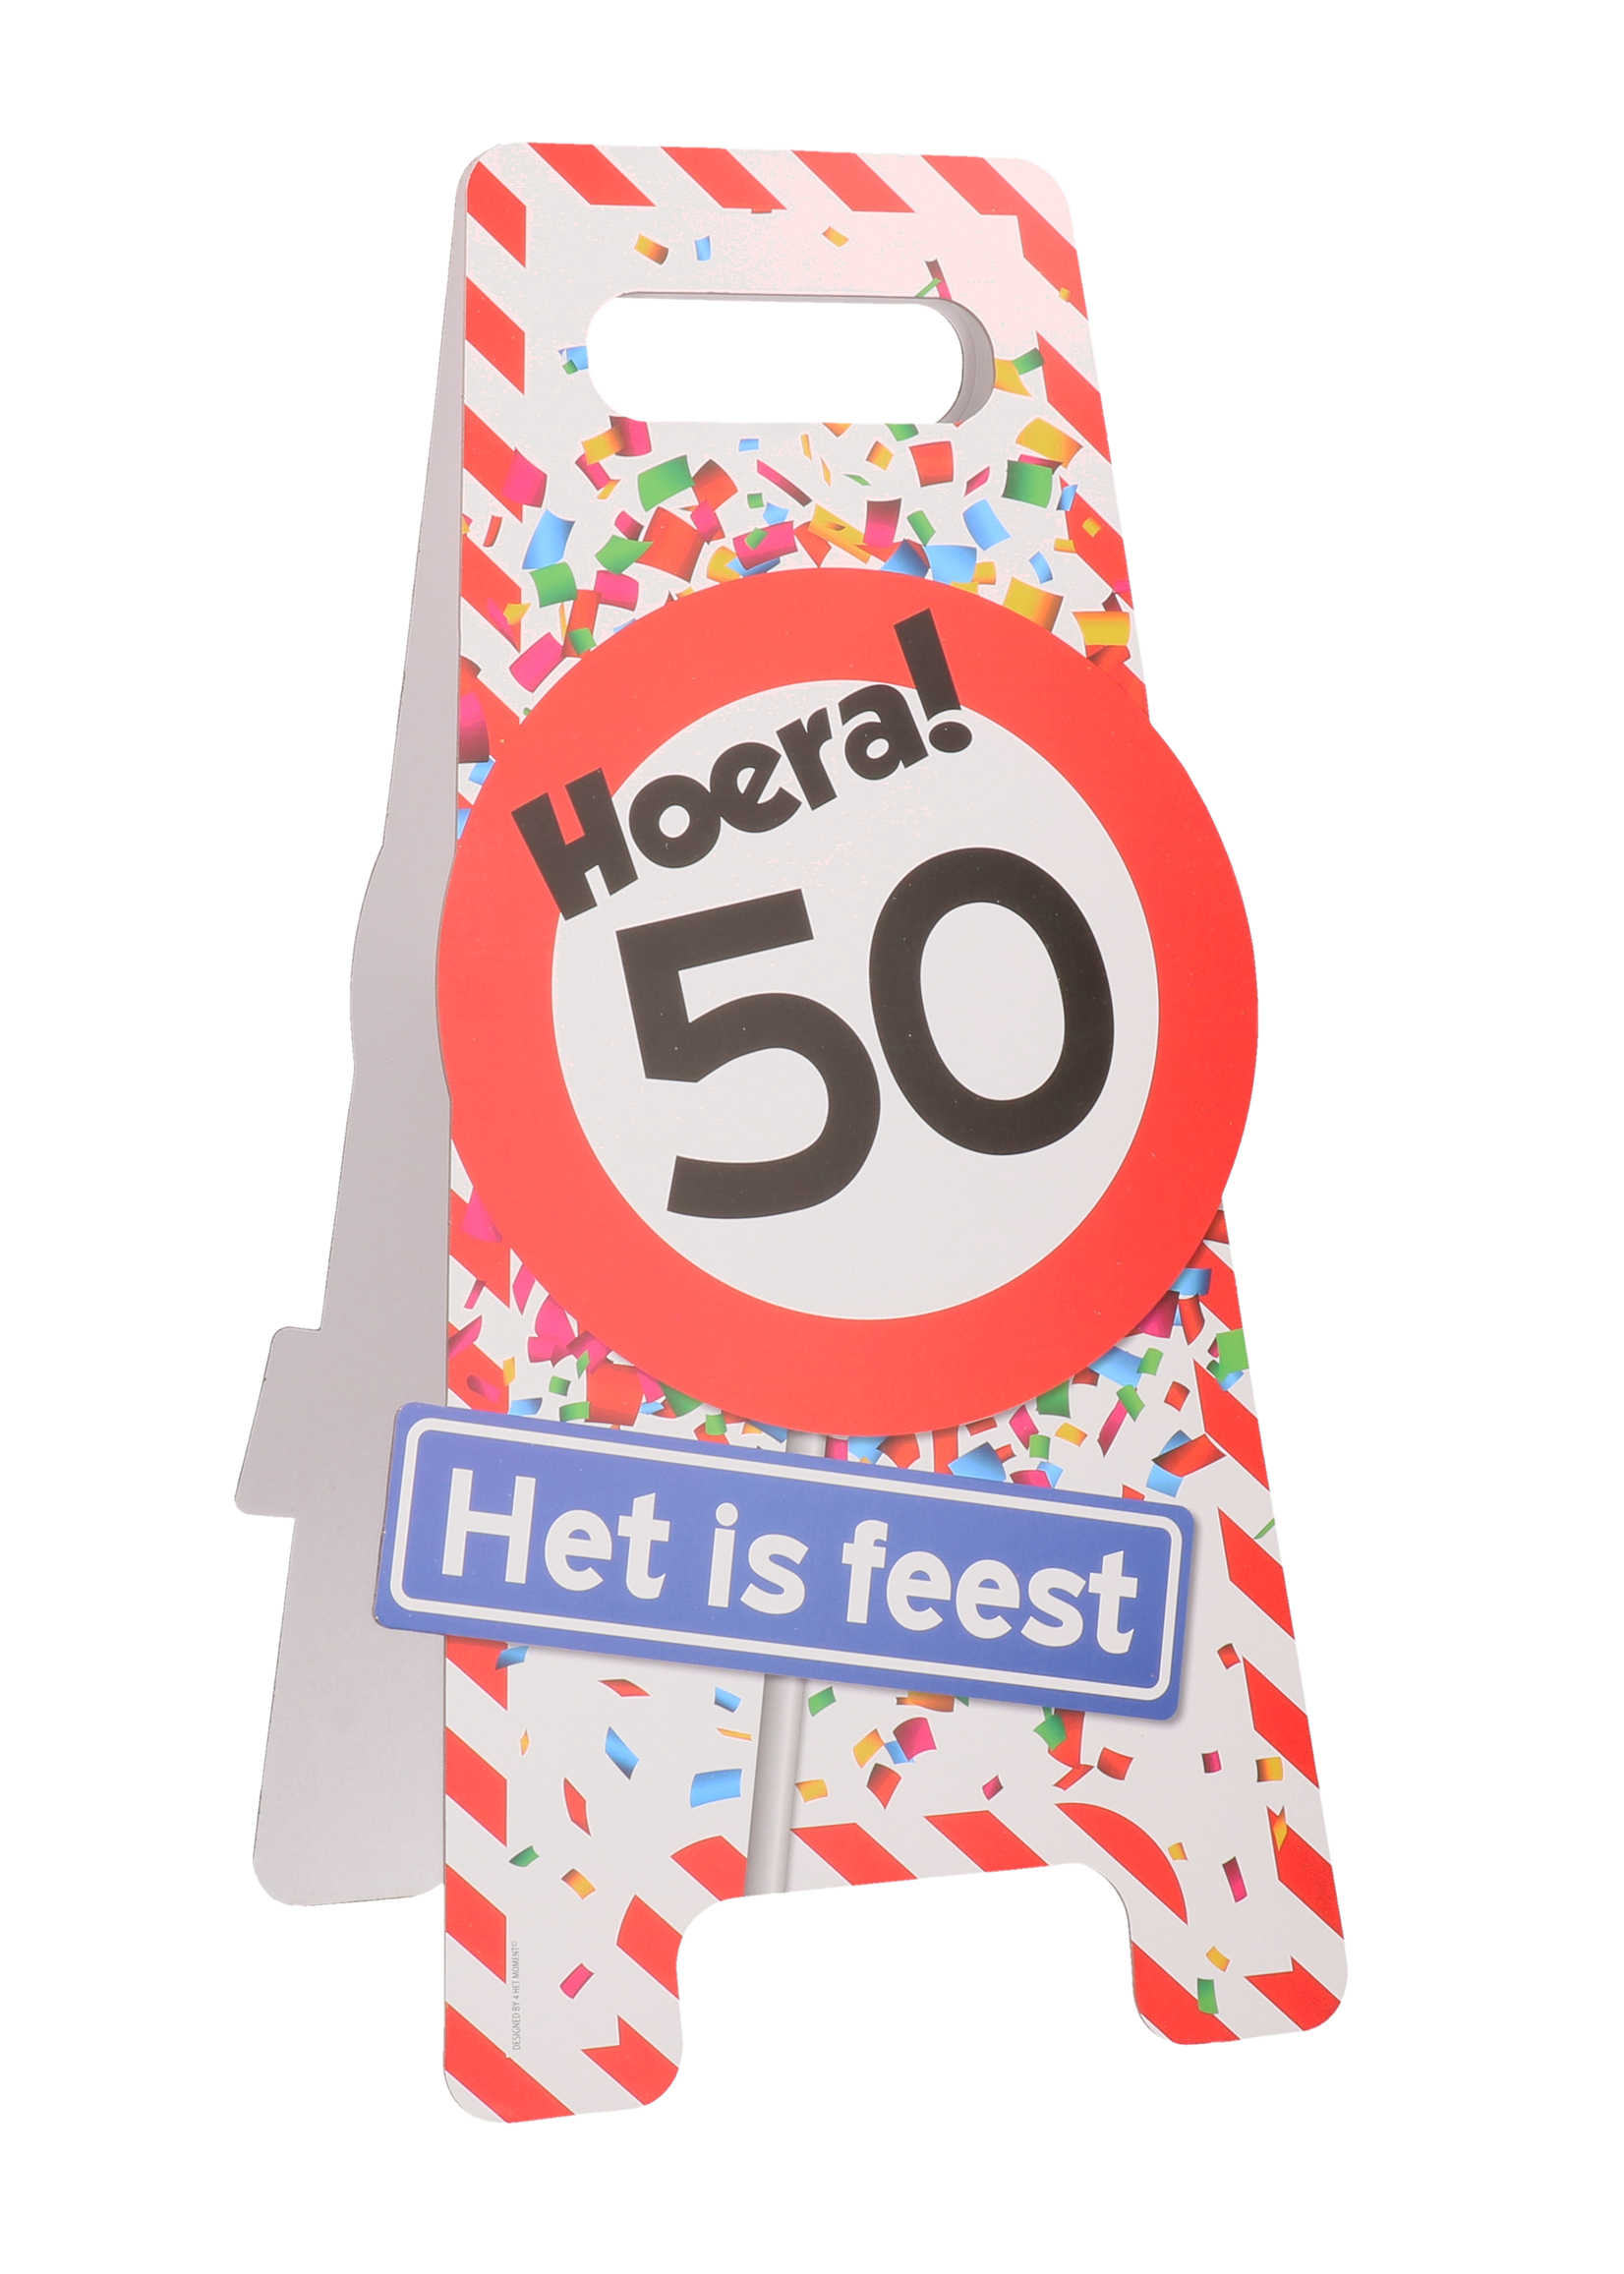 Feestkleding Breda Vloerbord 50 jaar het is feest